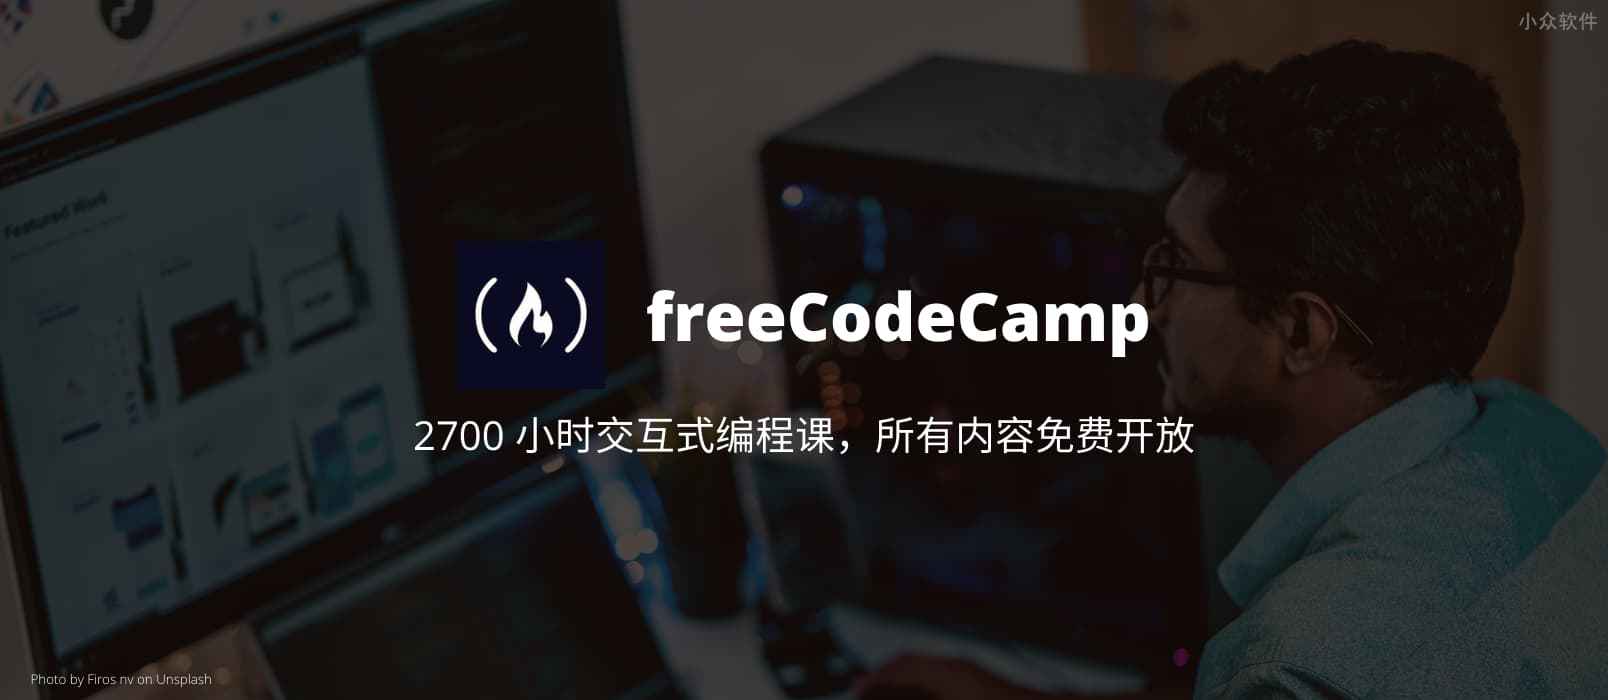 freeCodeCamp –  2700+ 小时交互式编程课，所有内容免费开放